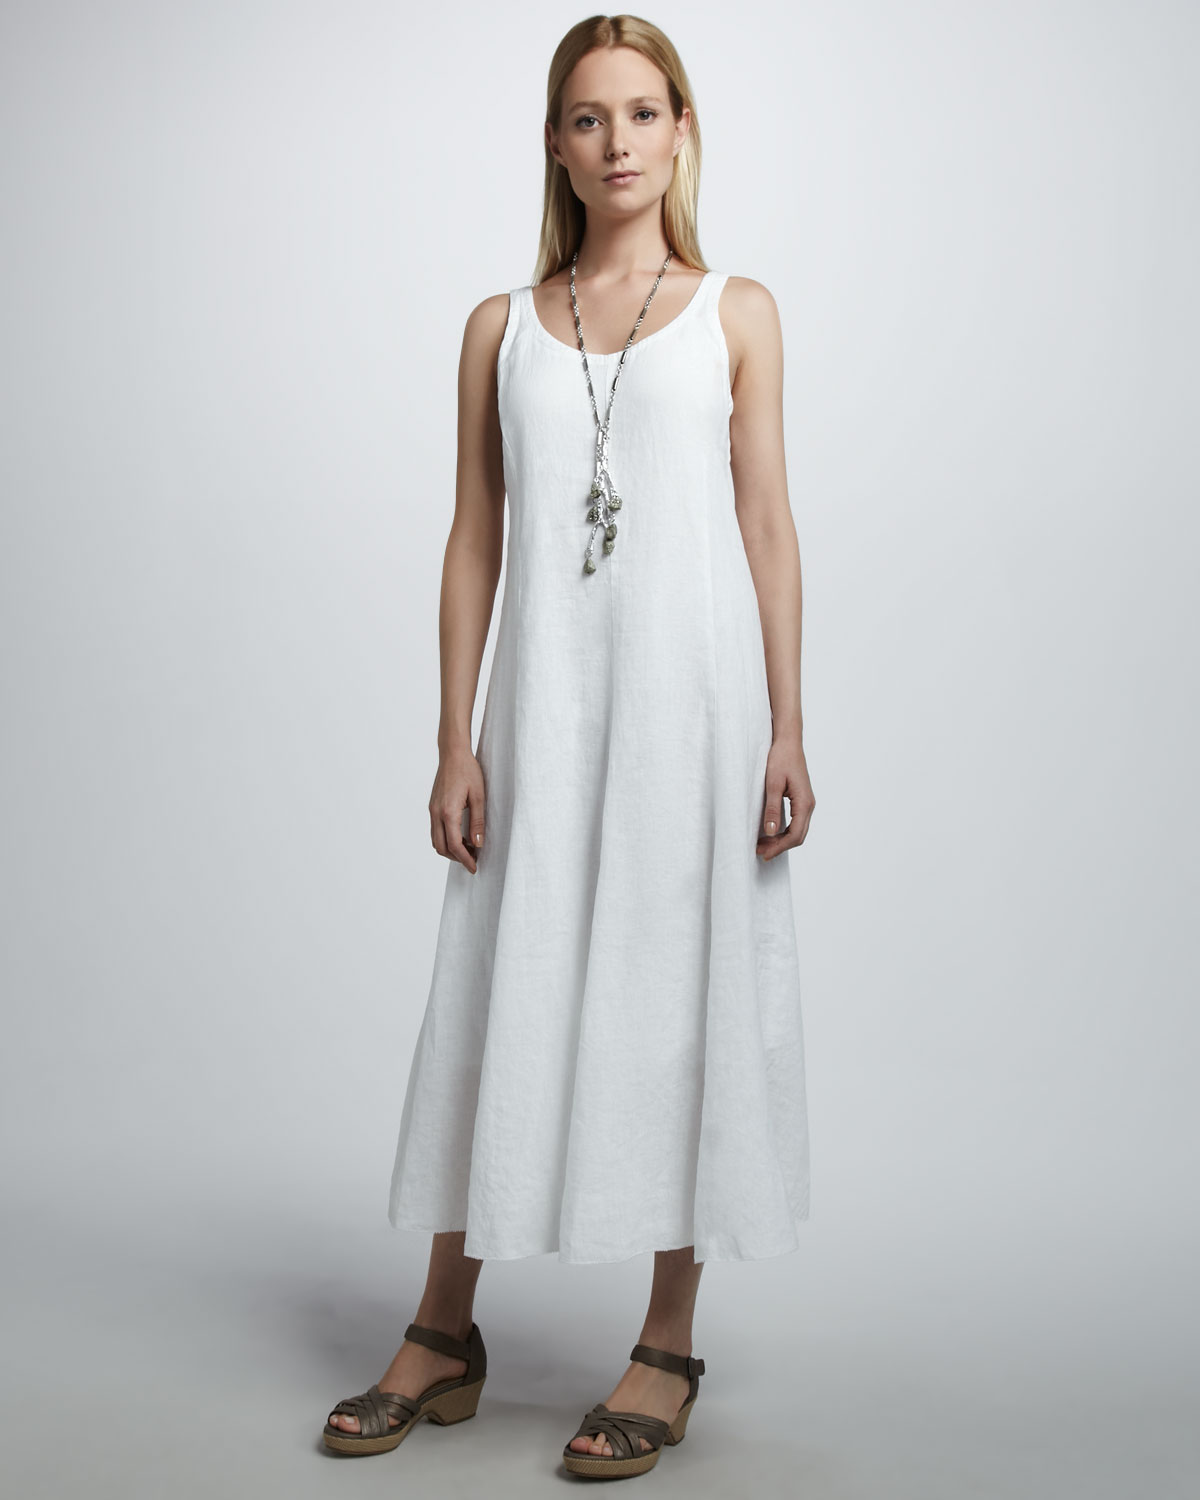 Lyst - Eileen Fisher Linen Maxi Dress in White